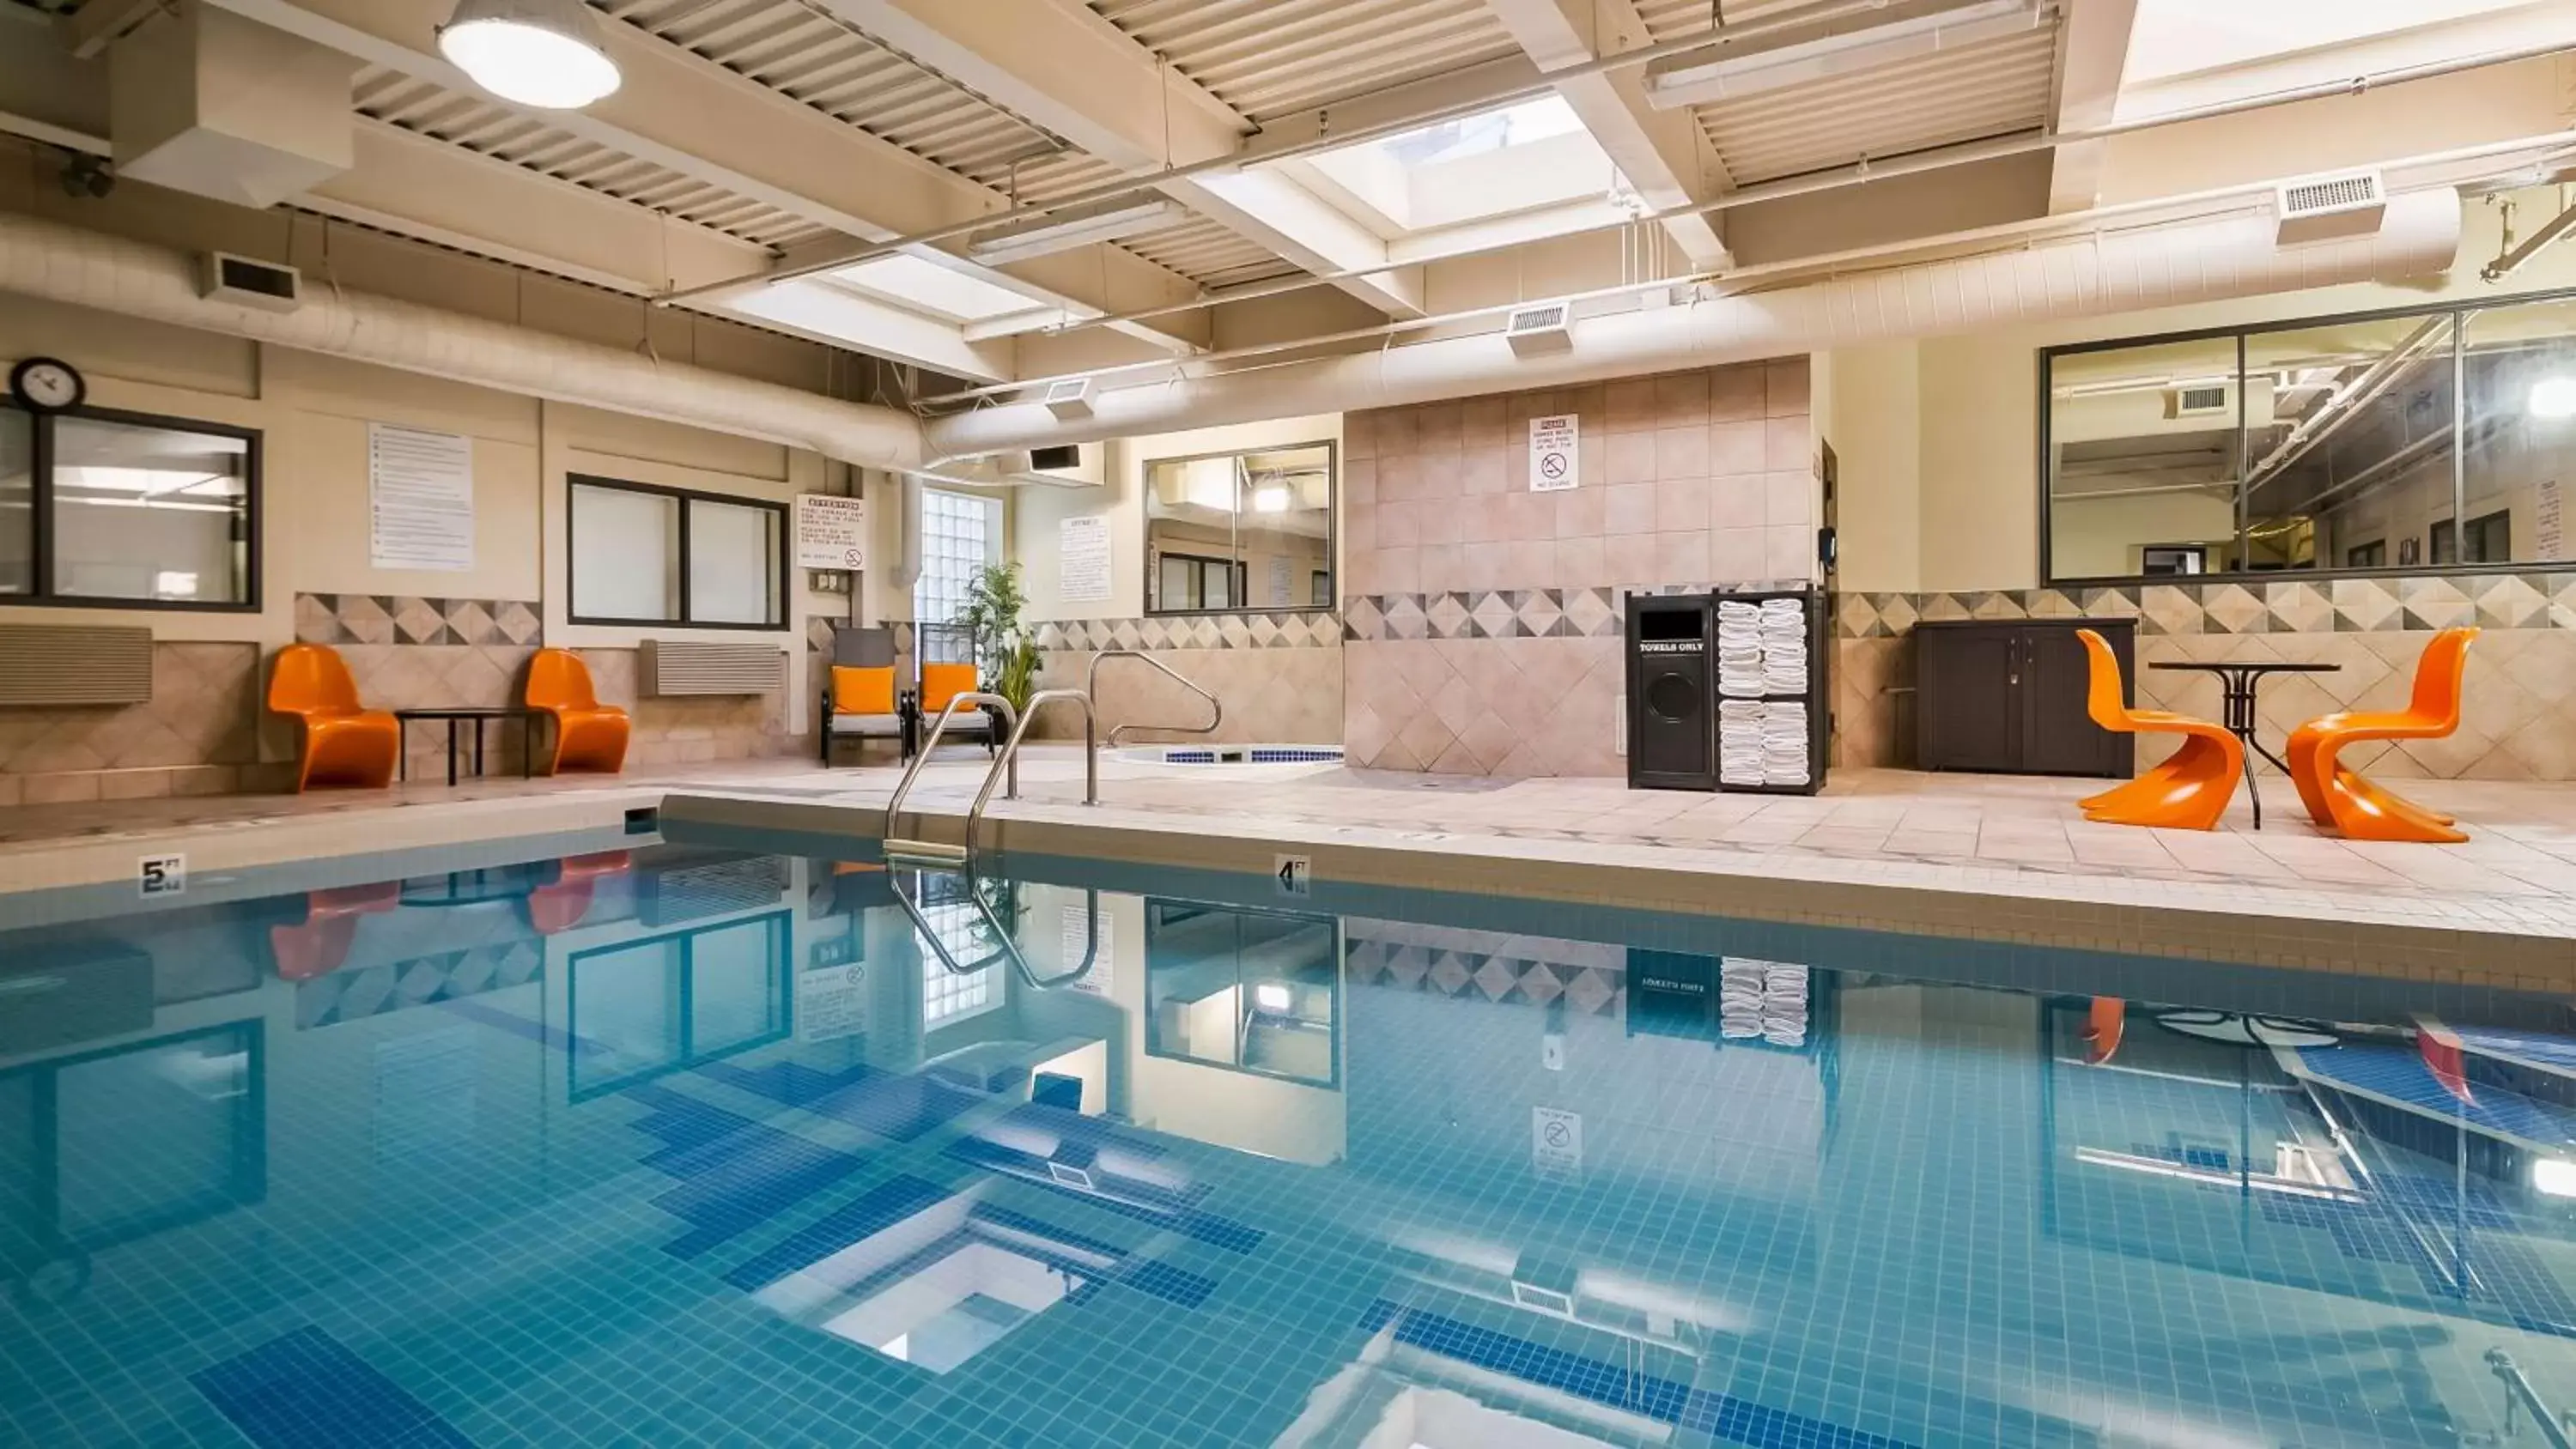 On site, Swimming Pool in Best Western Airport Inn